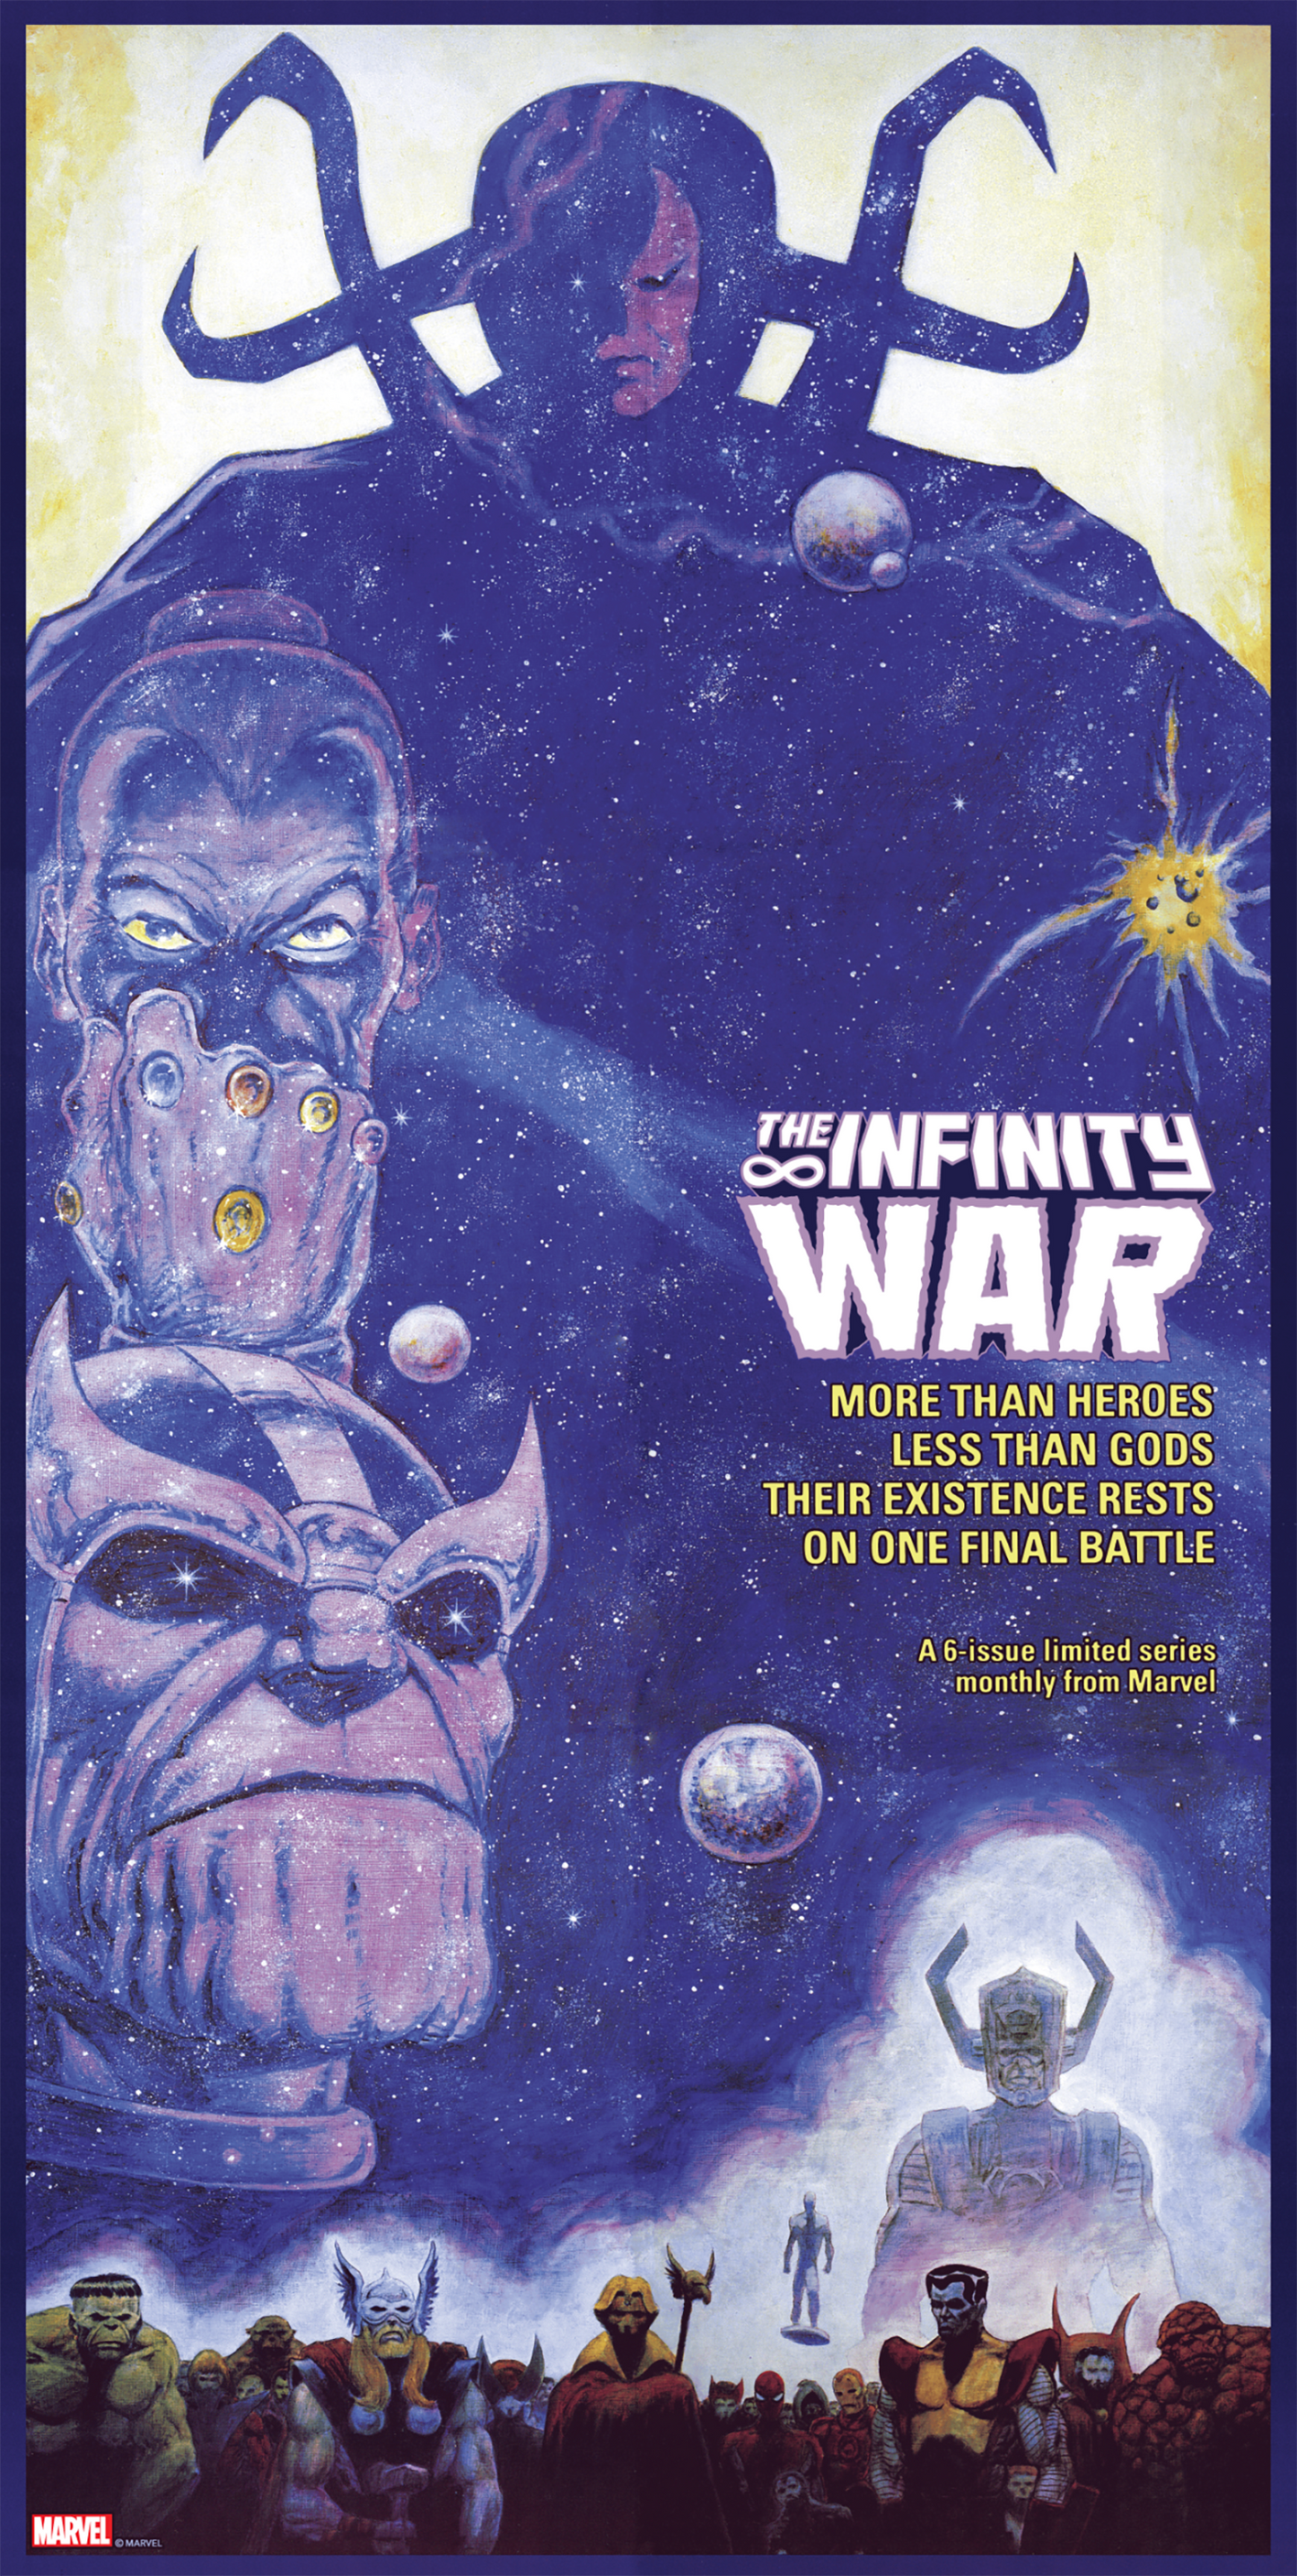 Jim Starlin "The Infinity War" Acrylic Panel Print